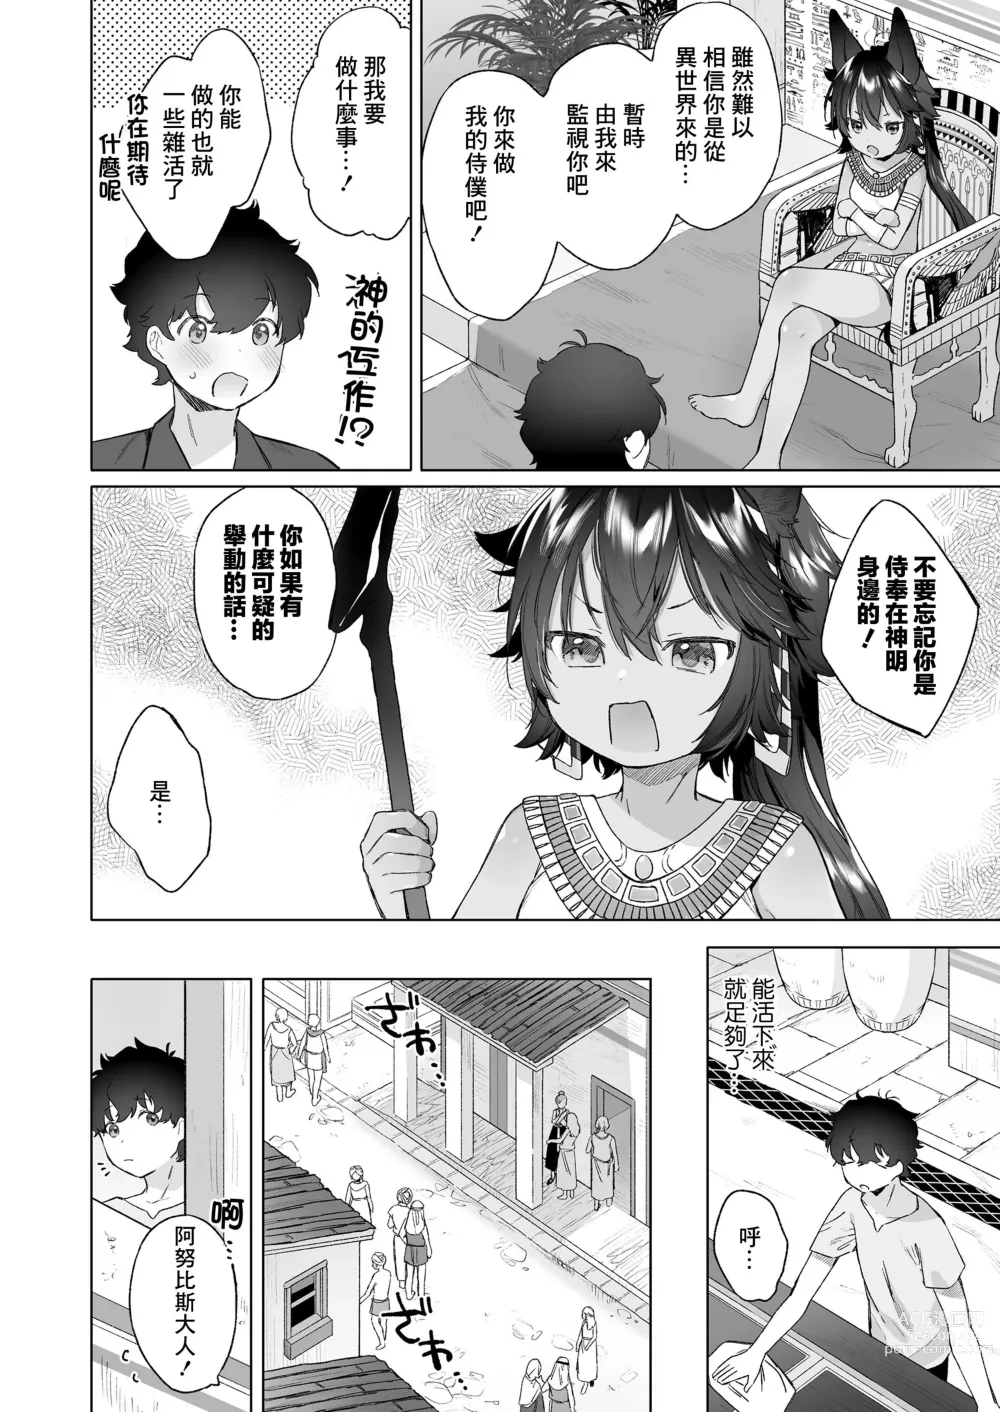 Page 4 of manga Kami-sama no Uragawa